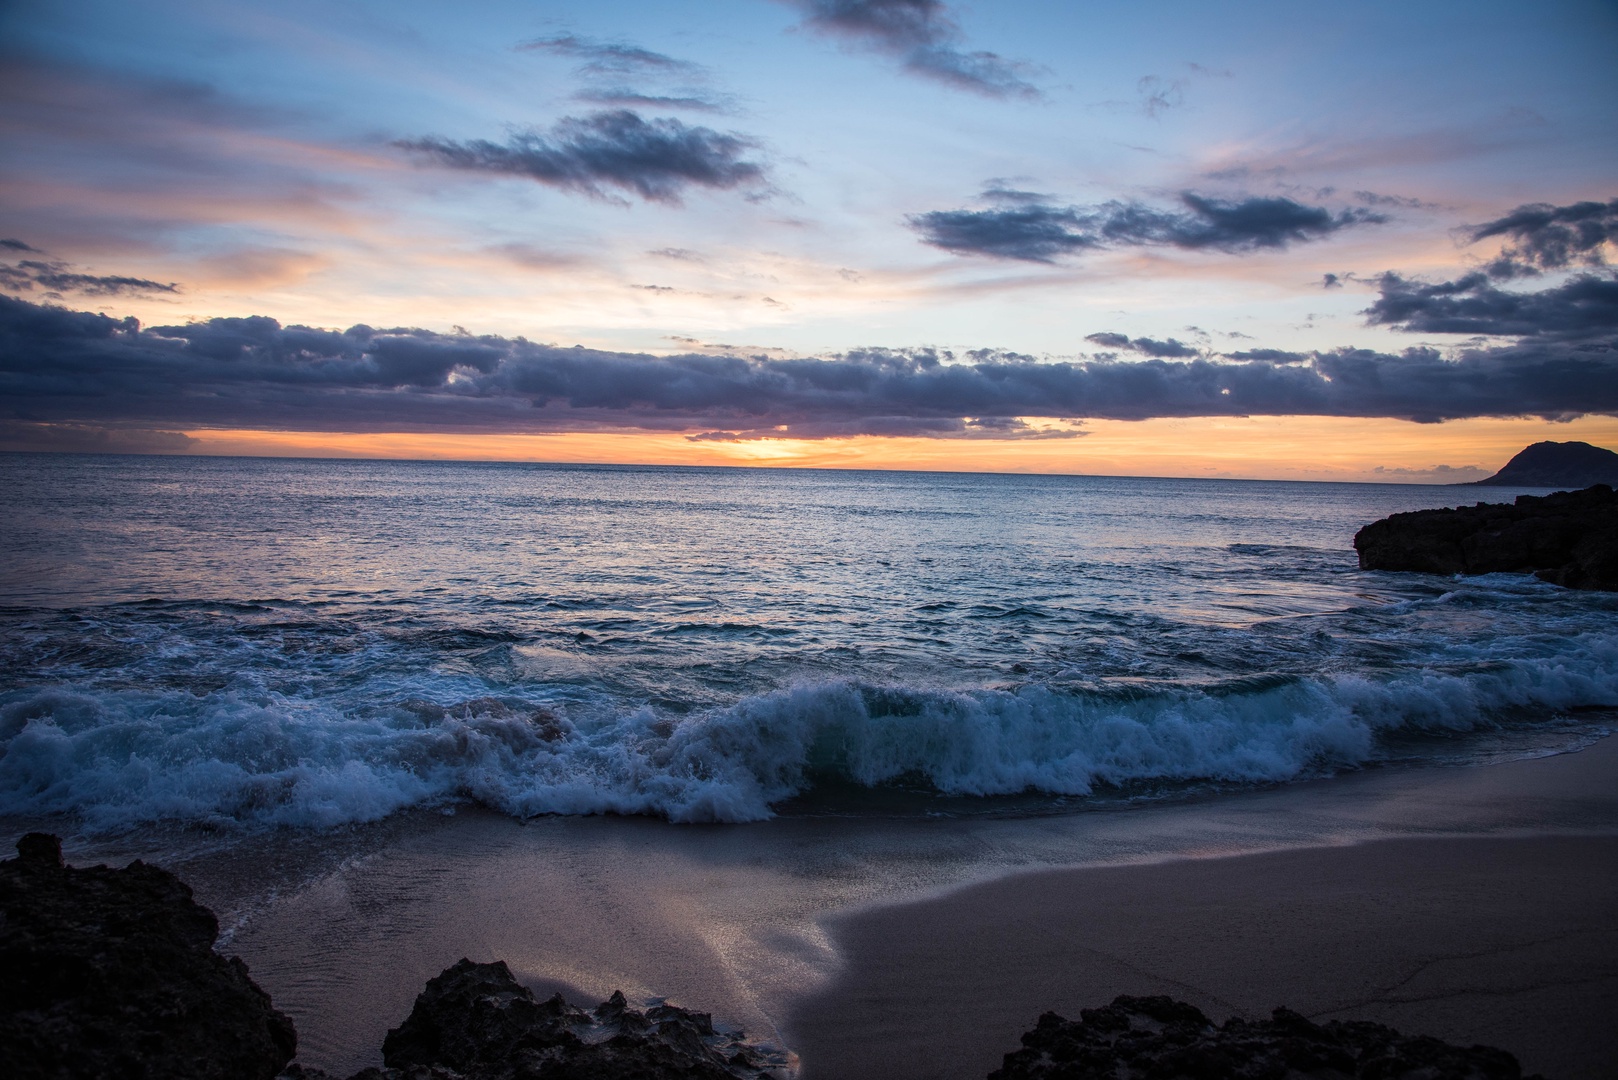 Kapolei Vacation Rentals, Kai Lani 20C - Enjoy the sunsets and sunrises at the beach.